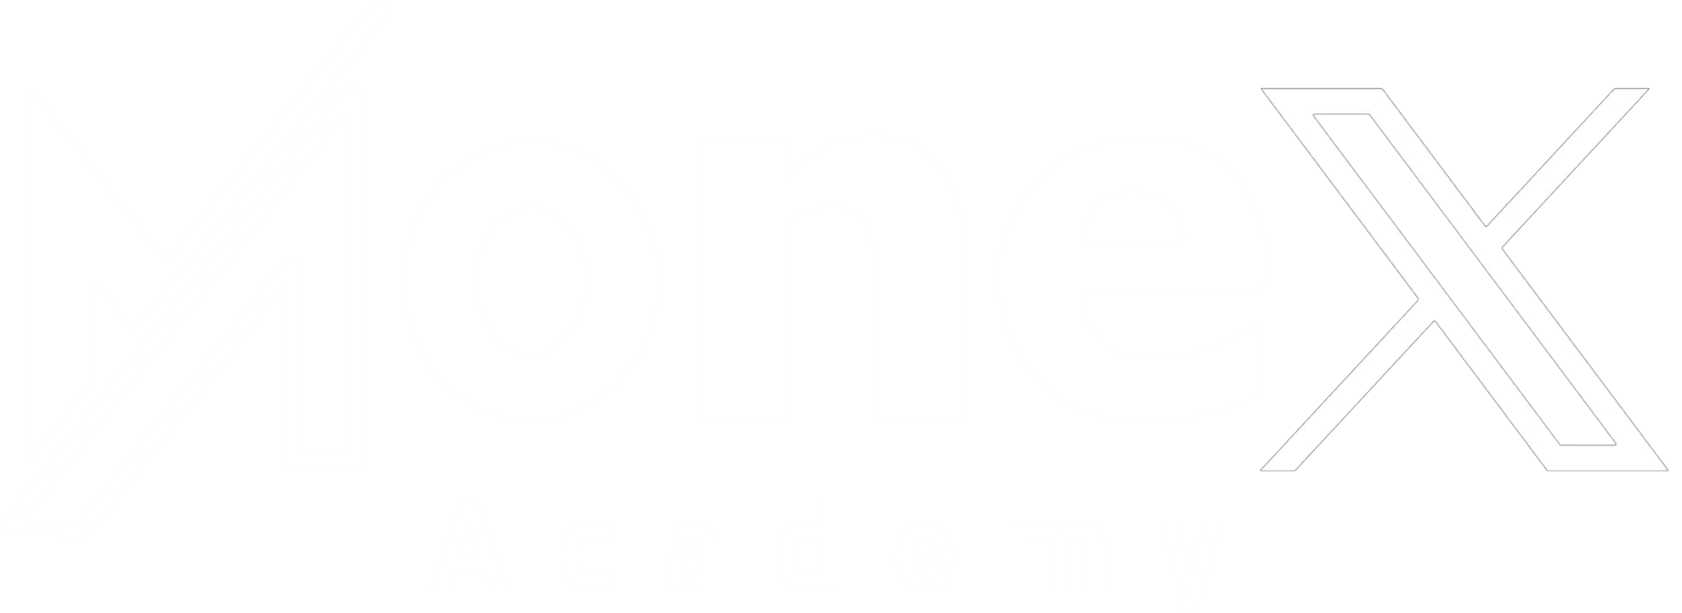 مانکس آکادمی | monex academy